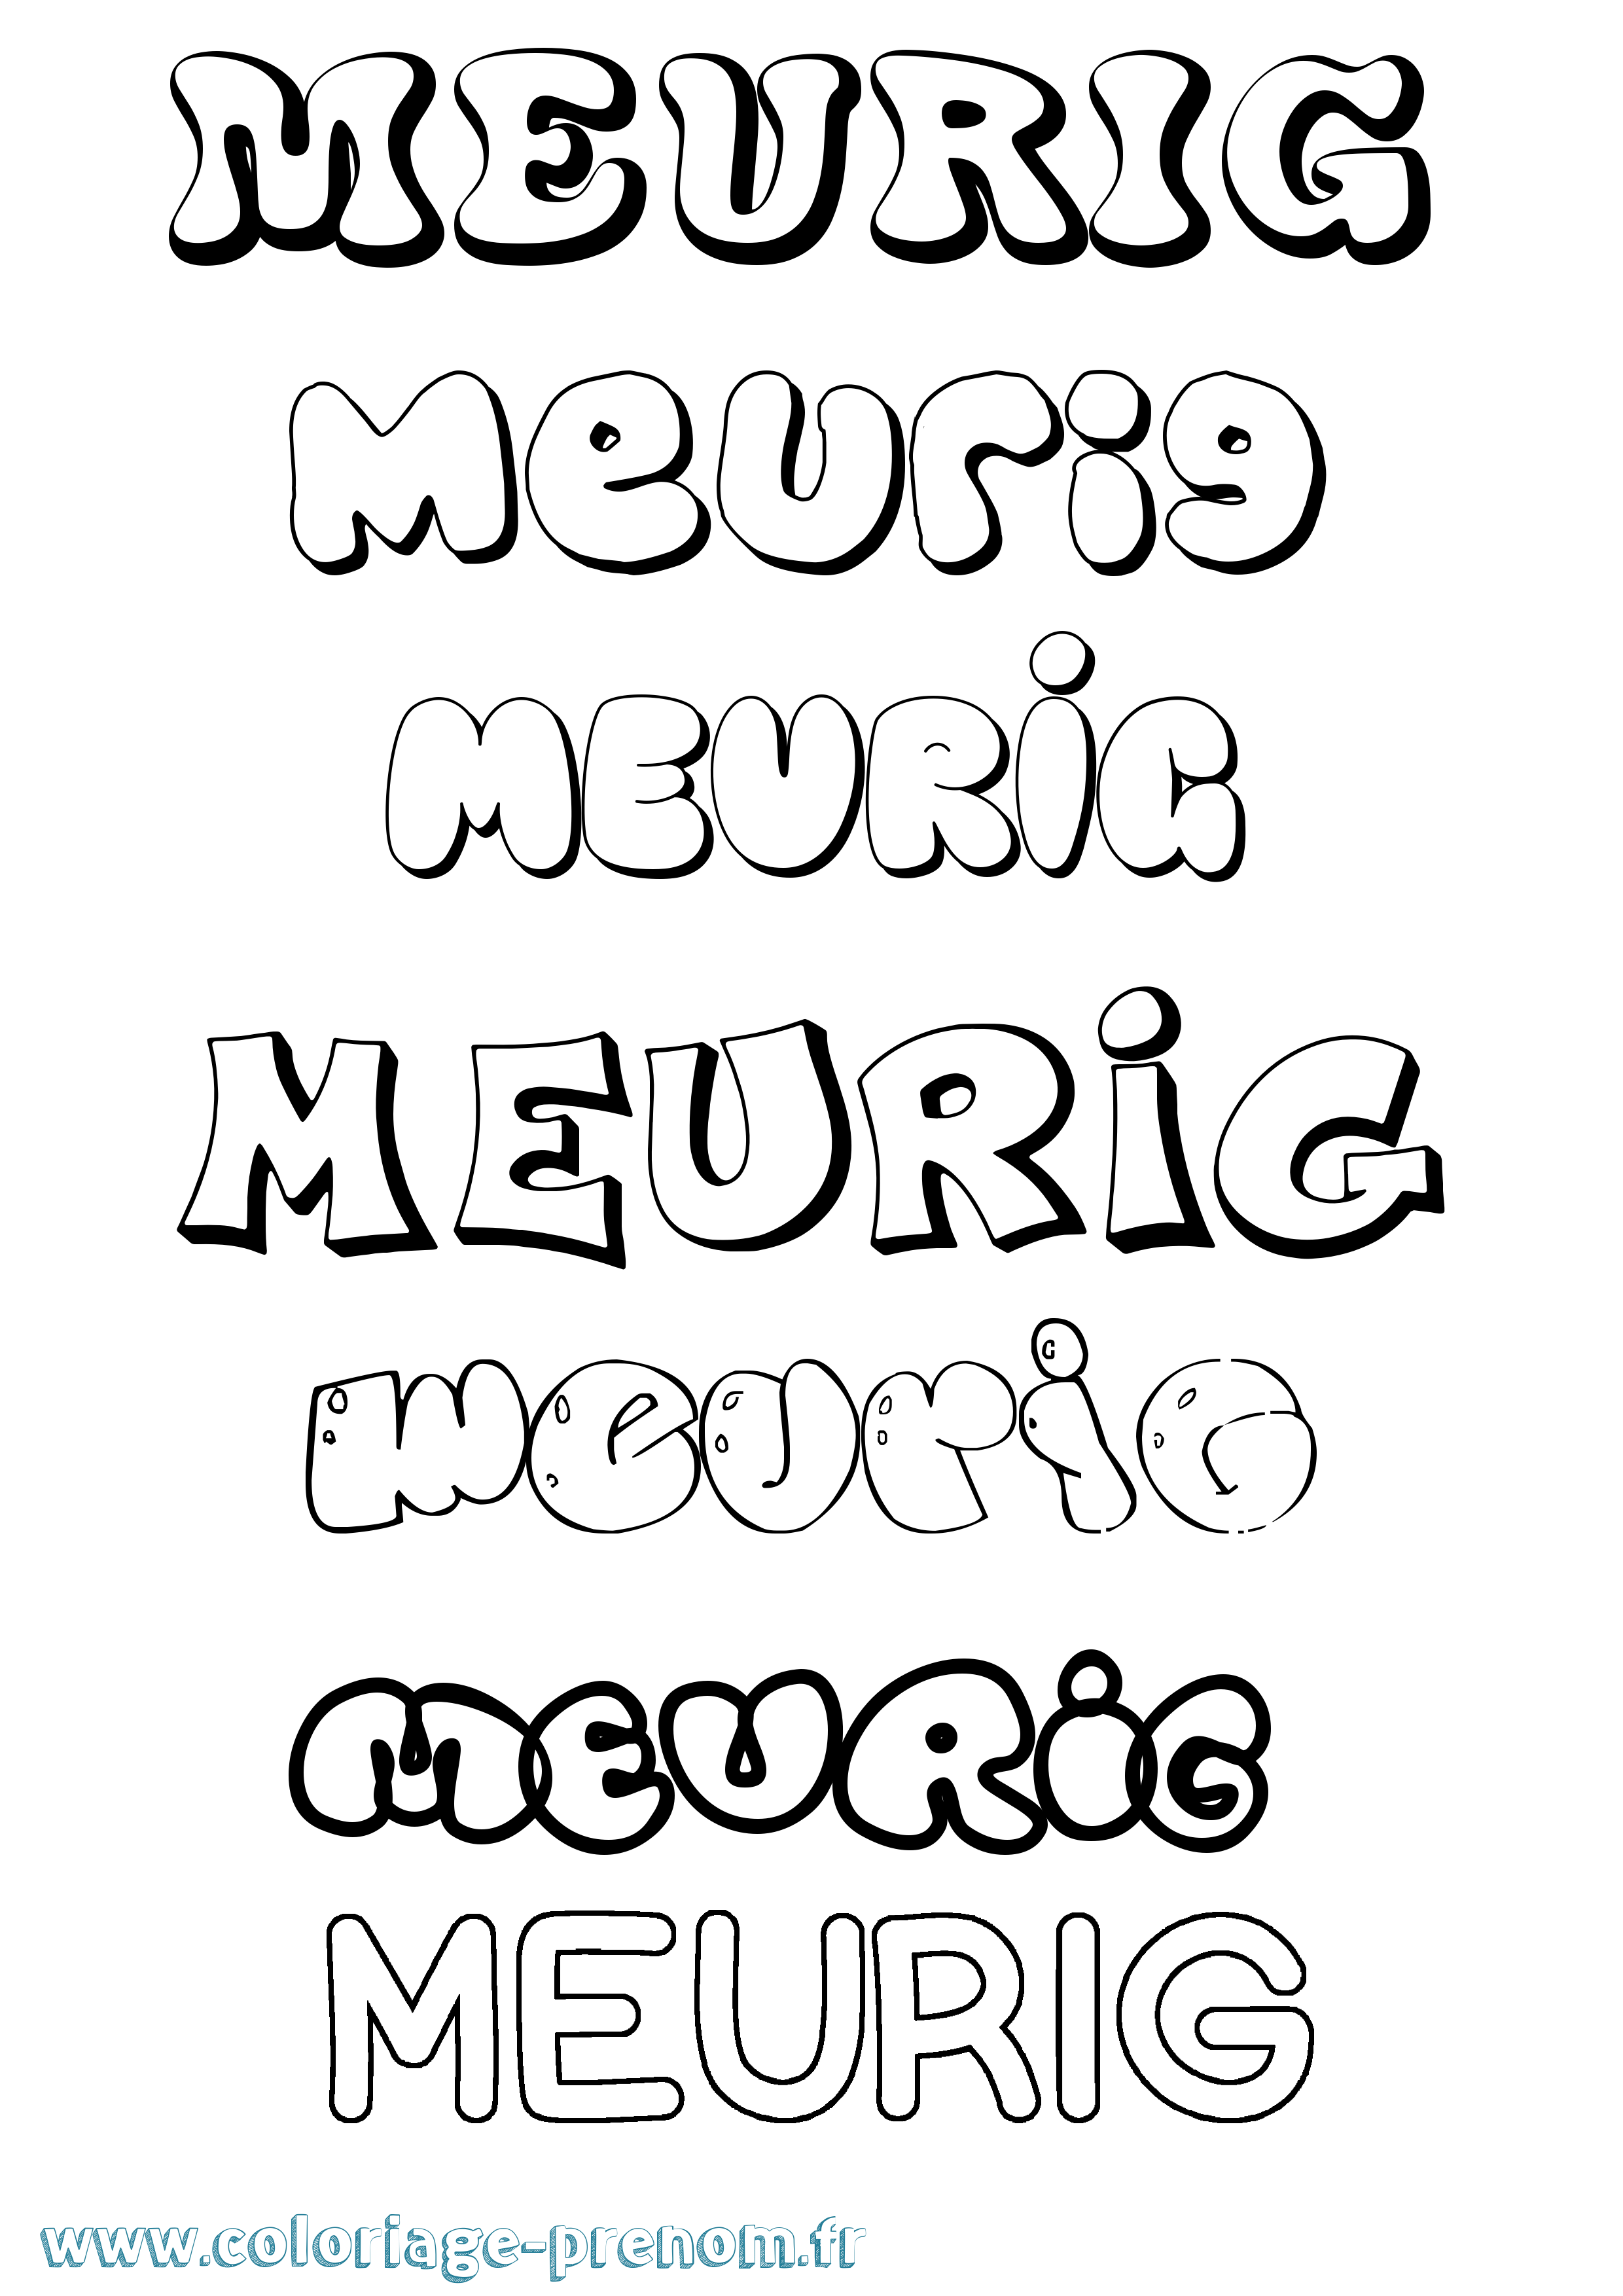 Coloriage prénom Meurig Bubble